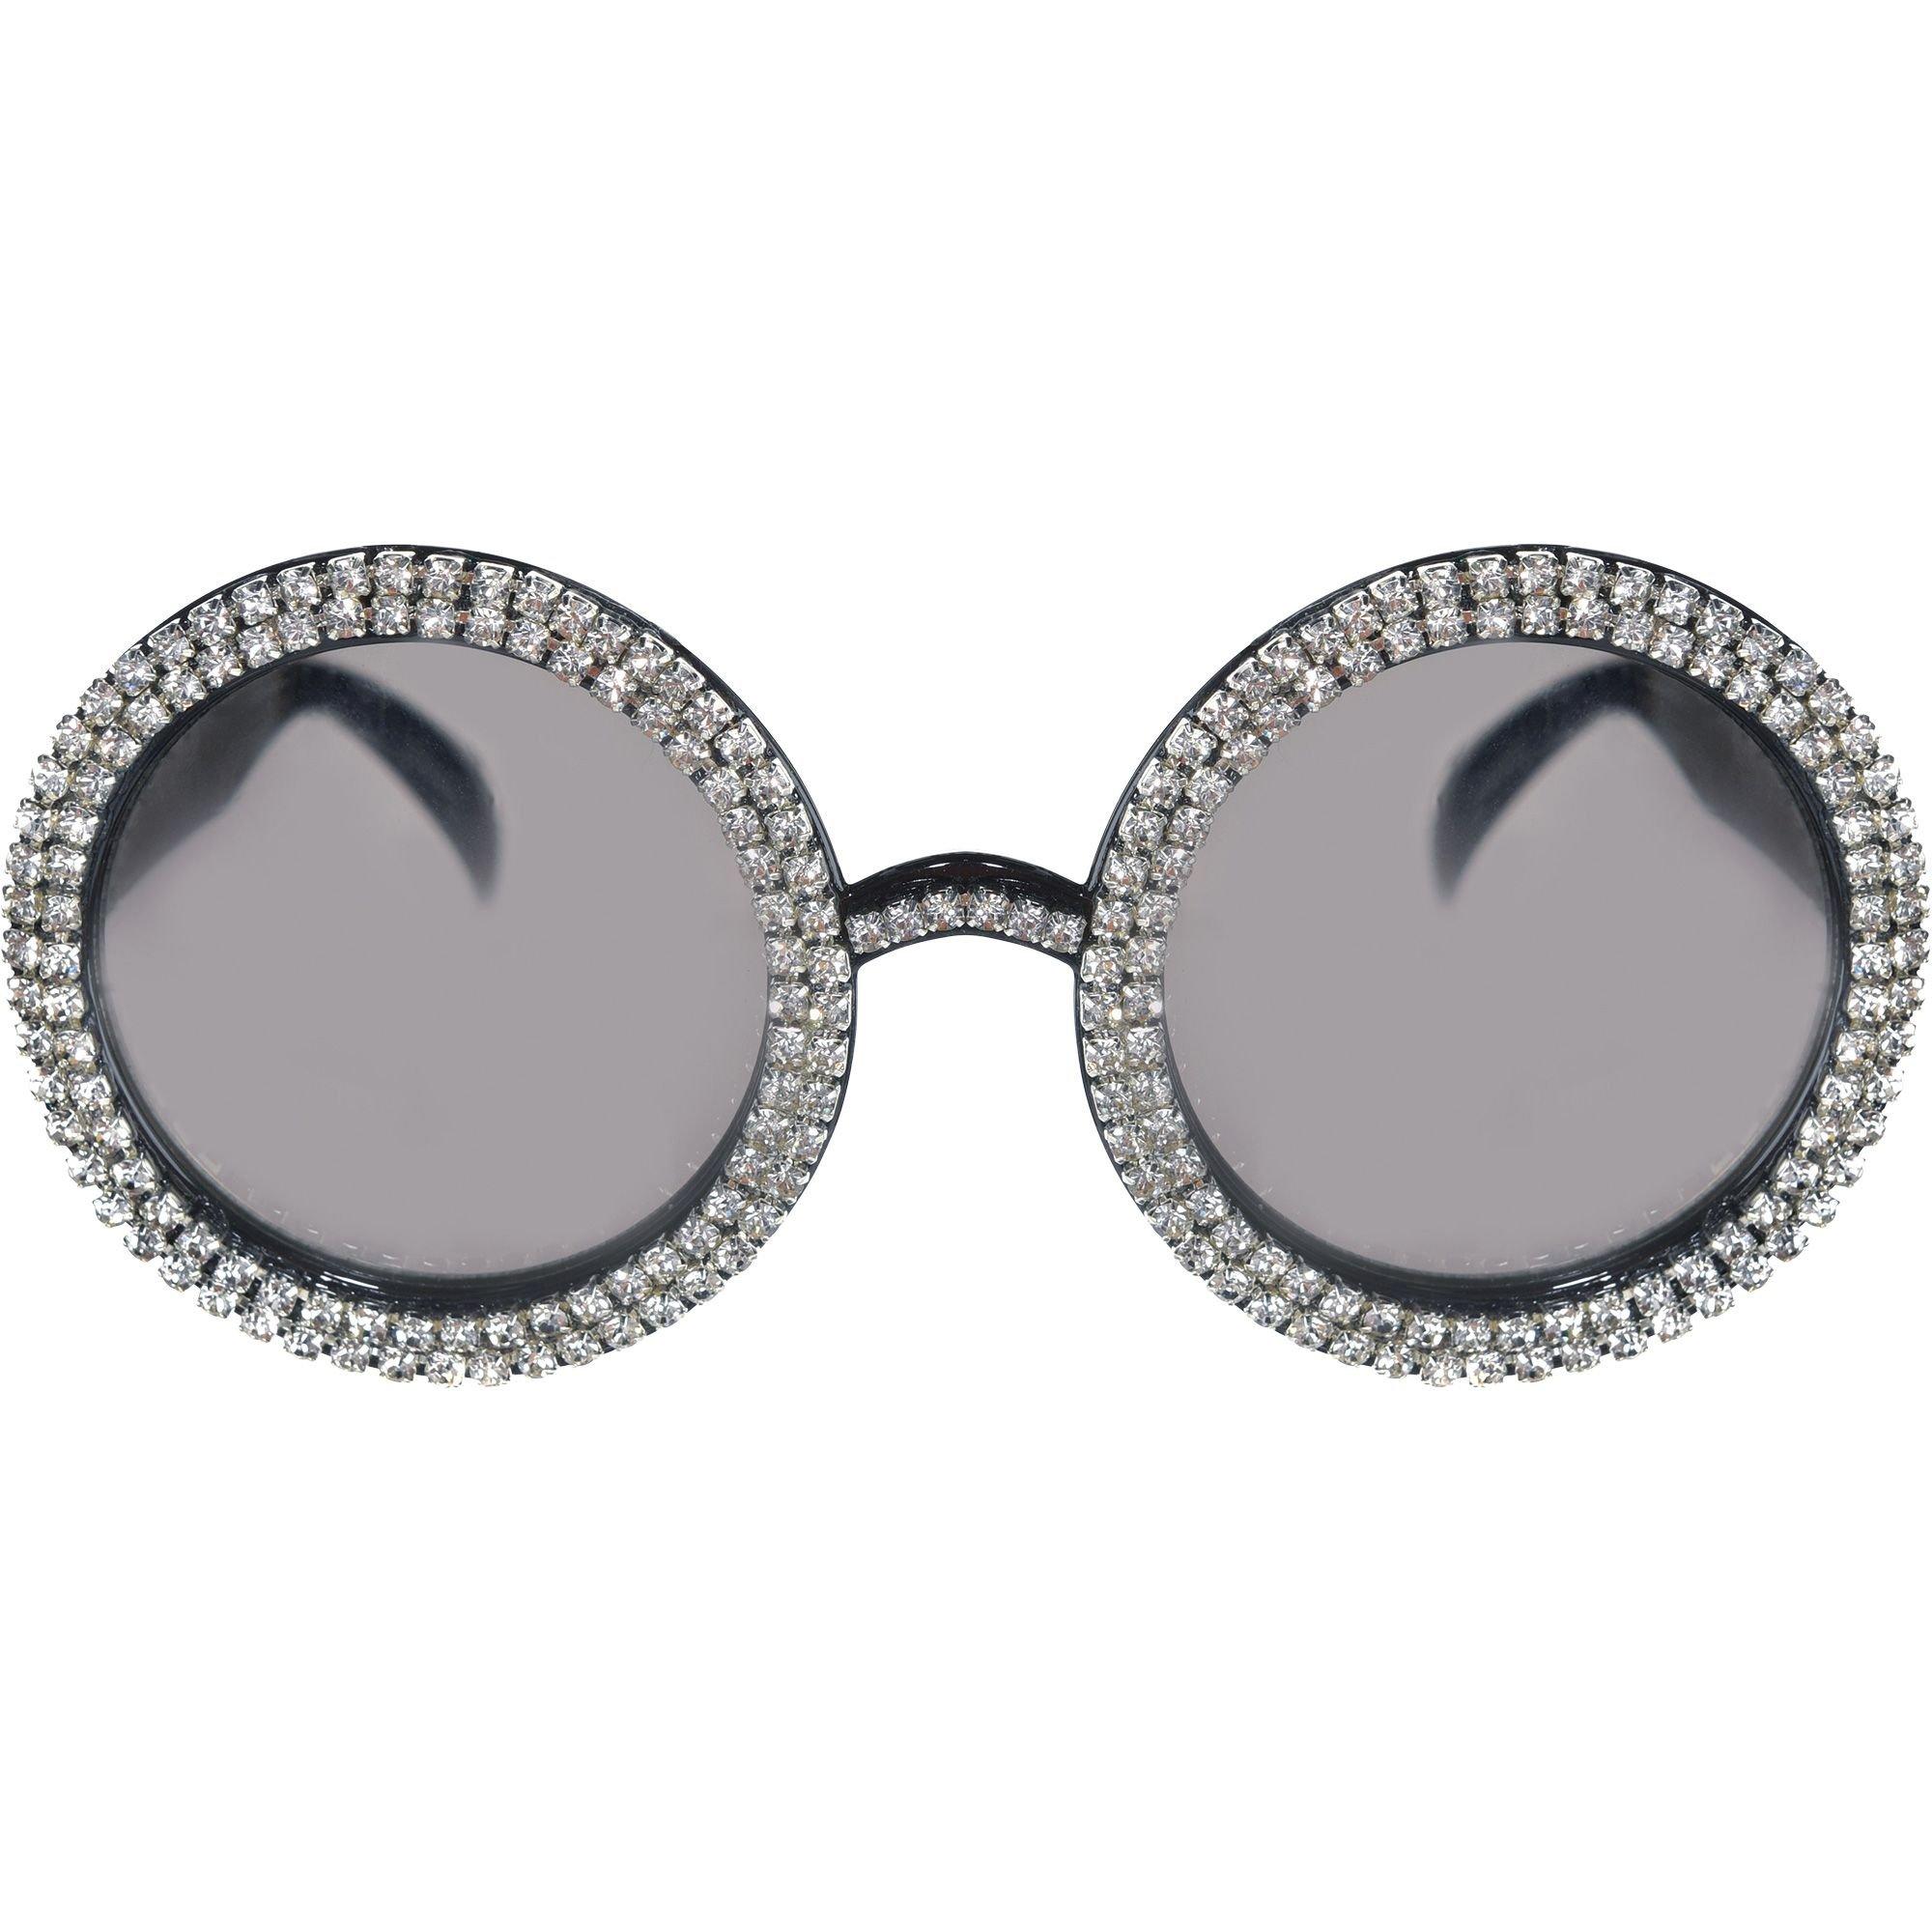 70s Oversized Crystal Sunglasses